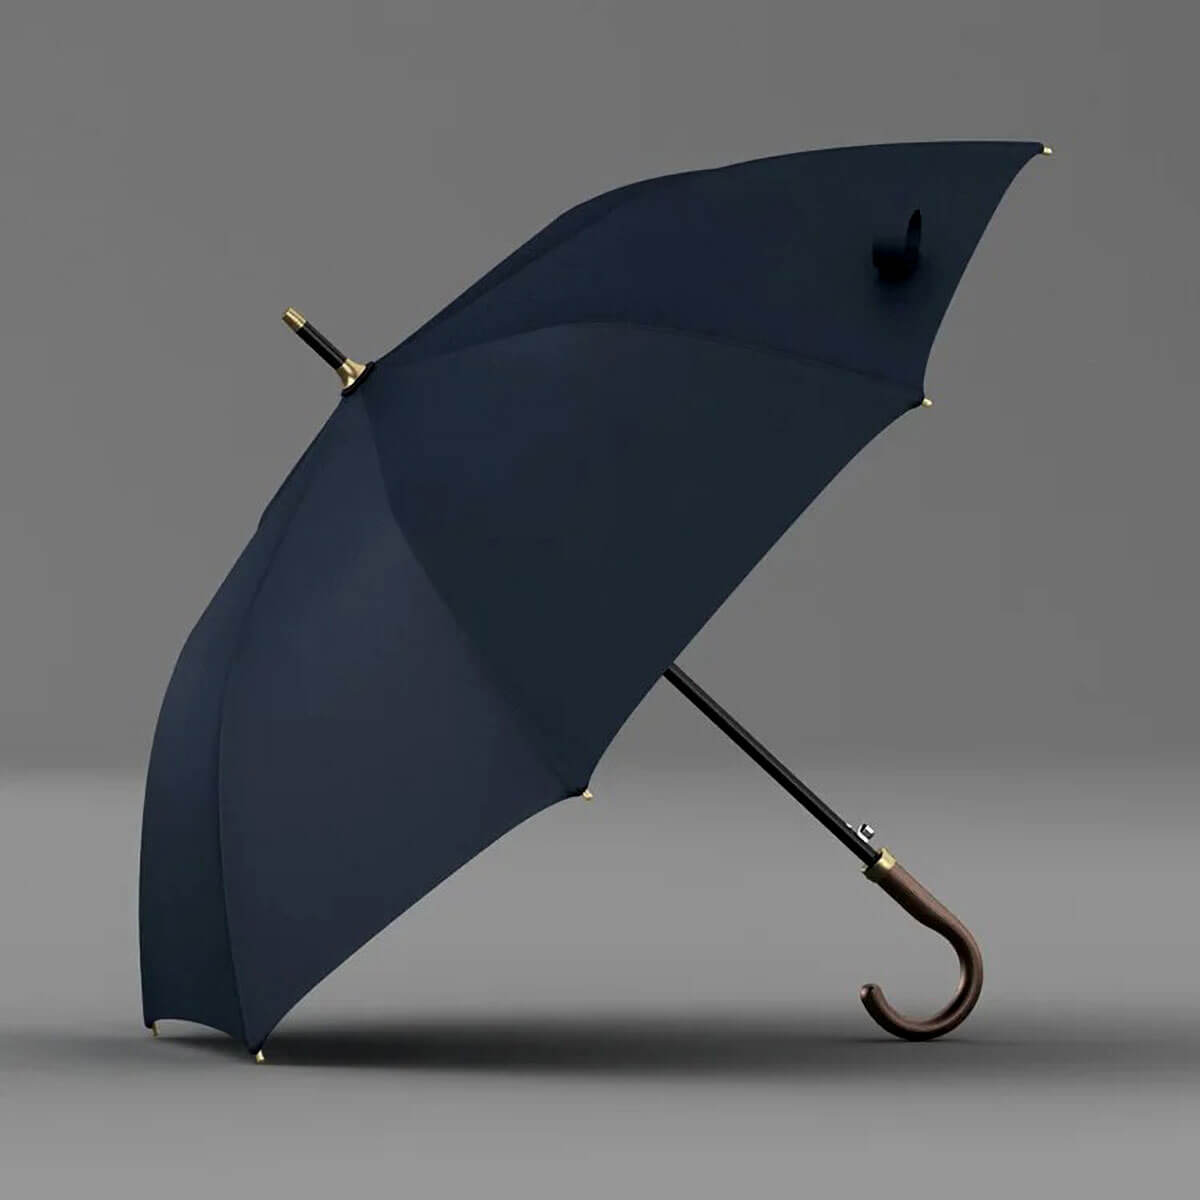 Stylish individual carrying Enchanted Elegance Umbrella in urban setting